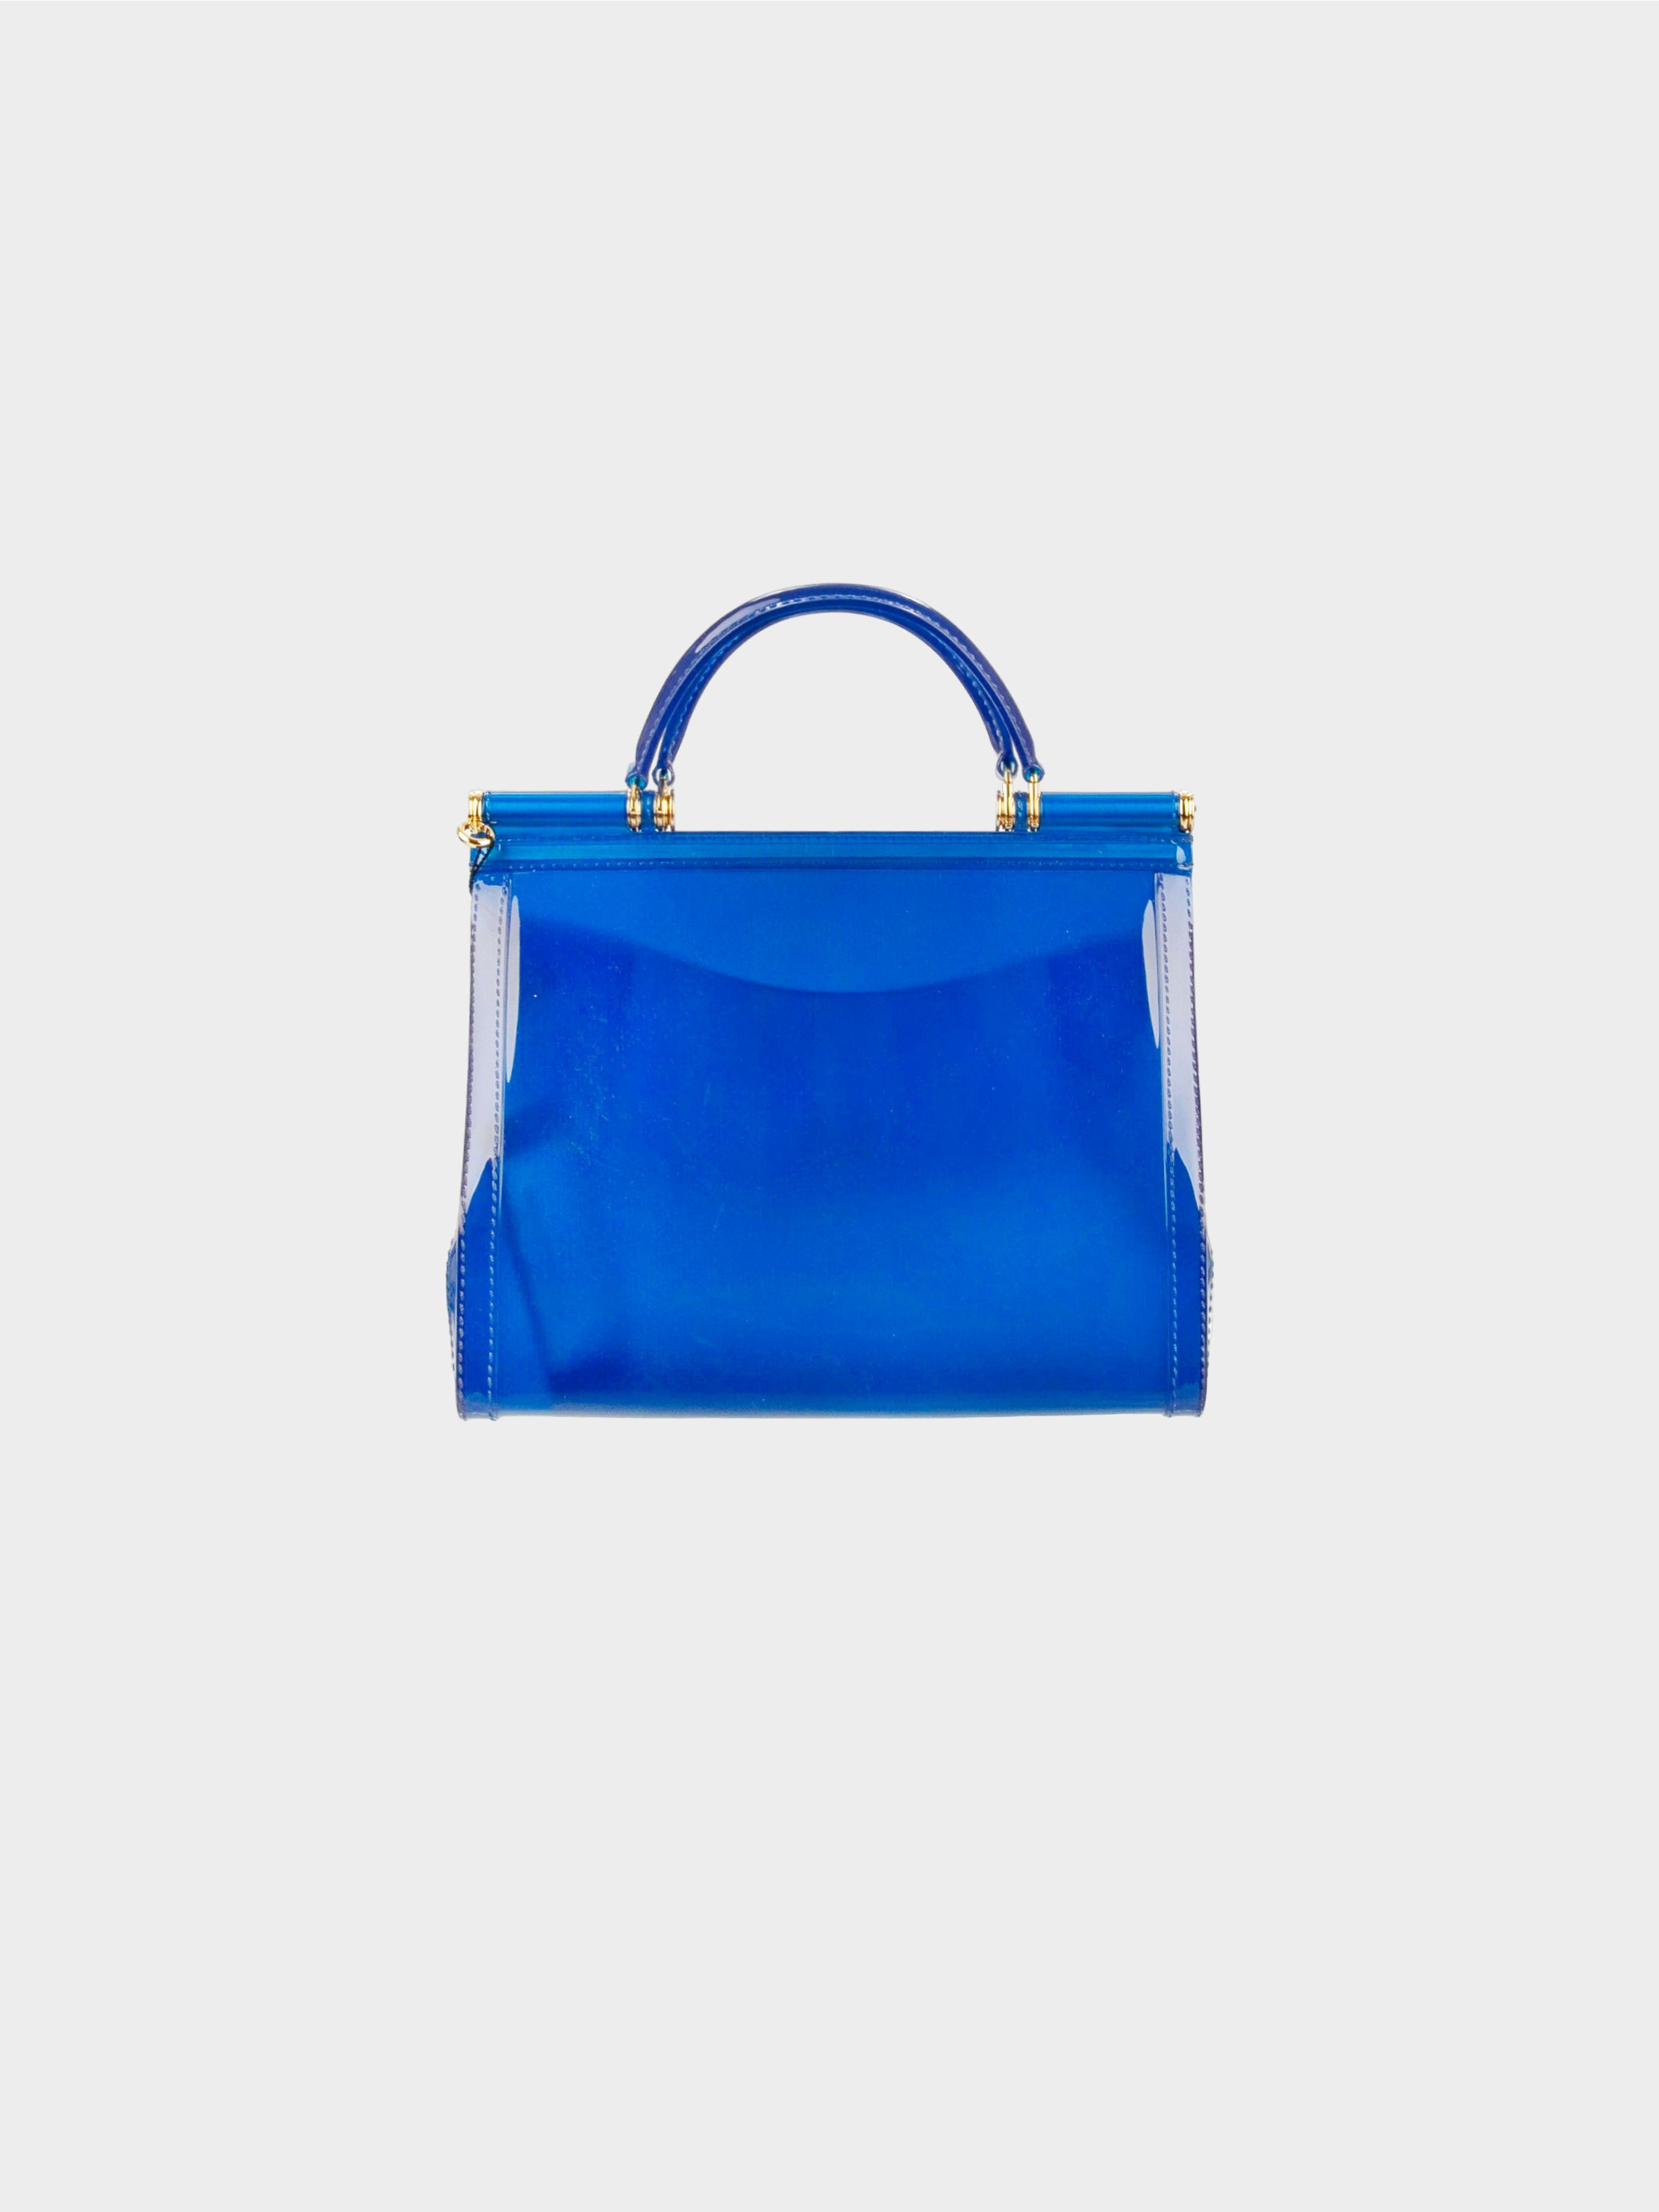 Dolce and Gabbana 2018 Blue PVC Miss Siciliy Bag